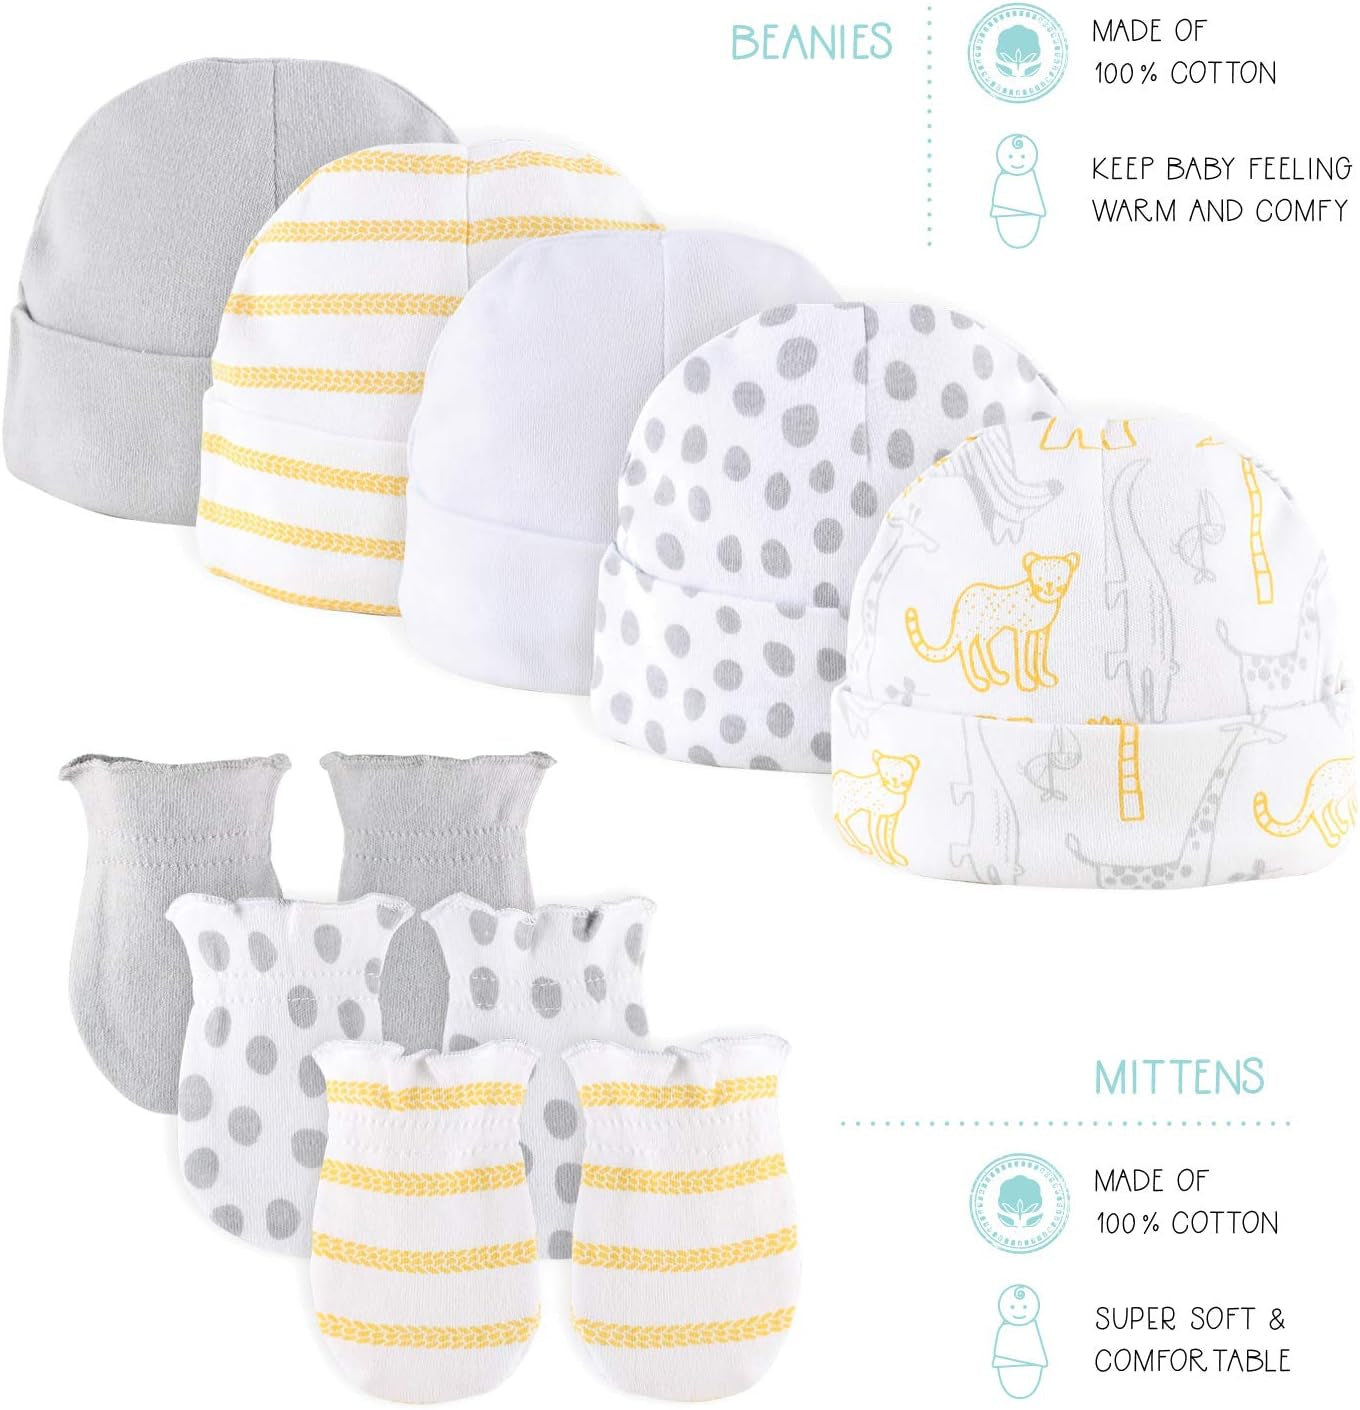 Newborn Layette Gift Set for Baby Boys or Girls - 23 Piece Gender Neutral Newborn Clothes & Accessories Set - Safari Themed